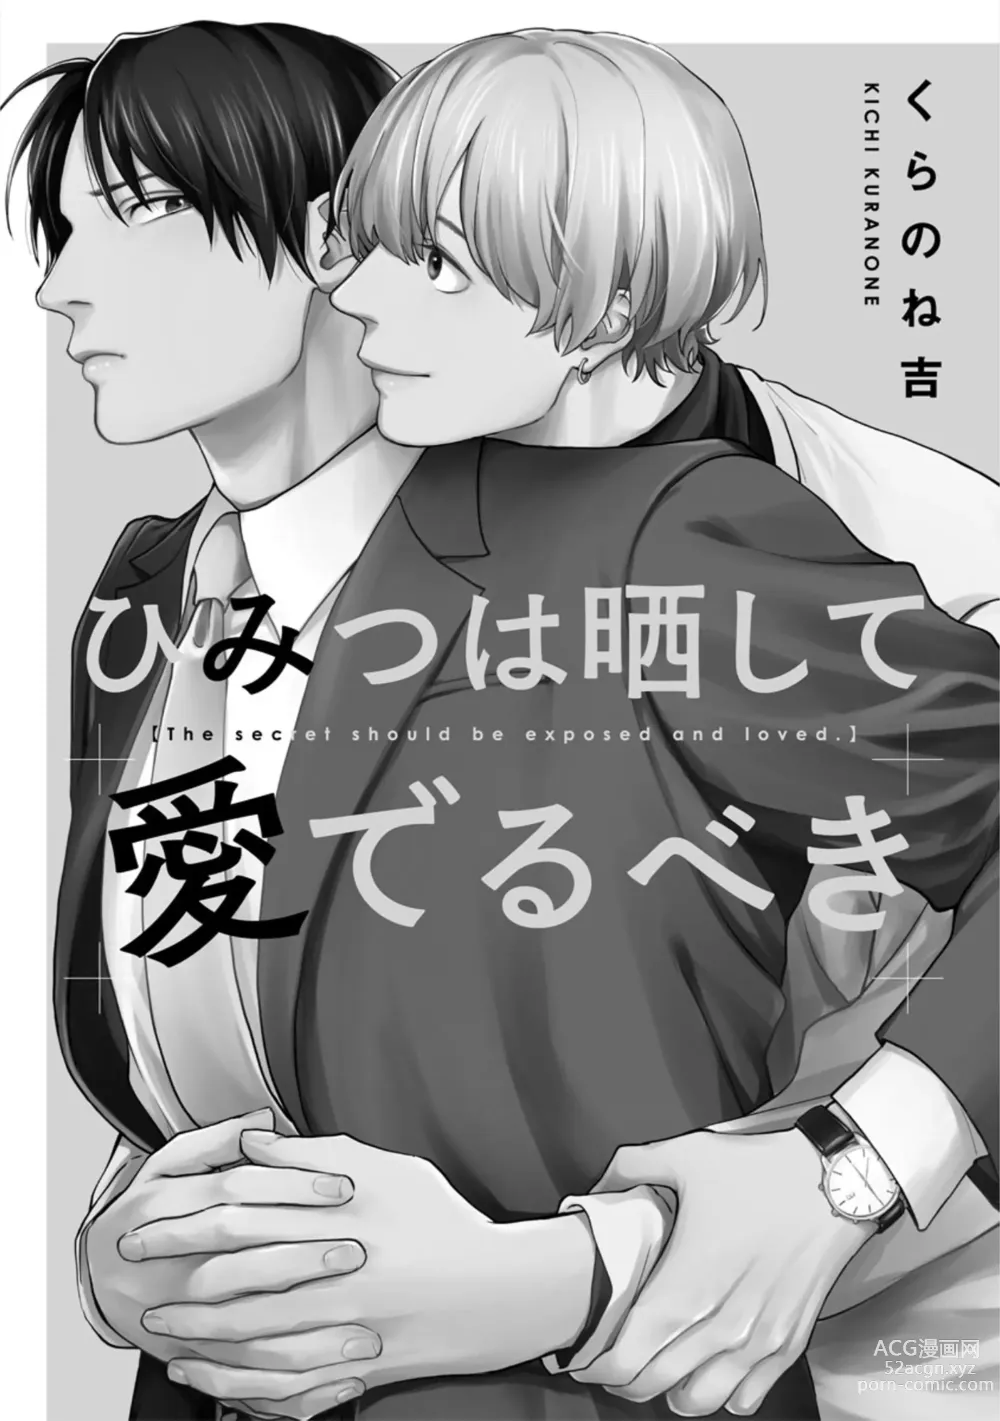 Page 5 of manga 秘密应被公开与赞赏